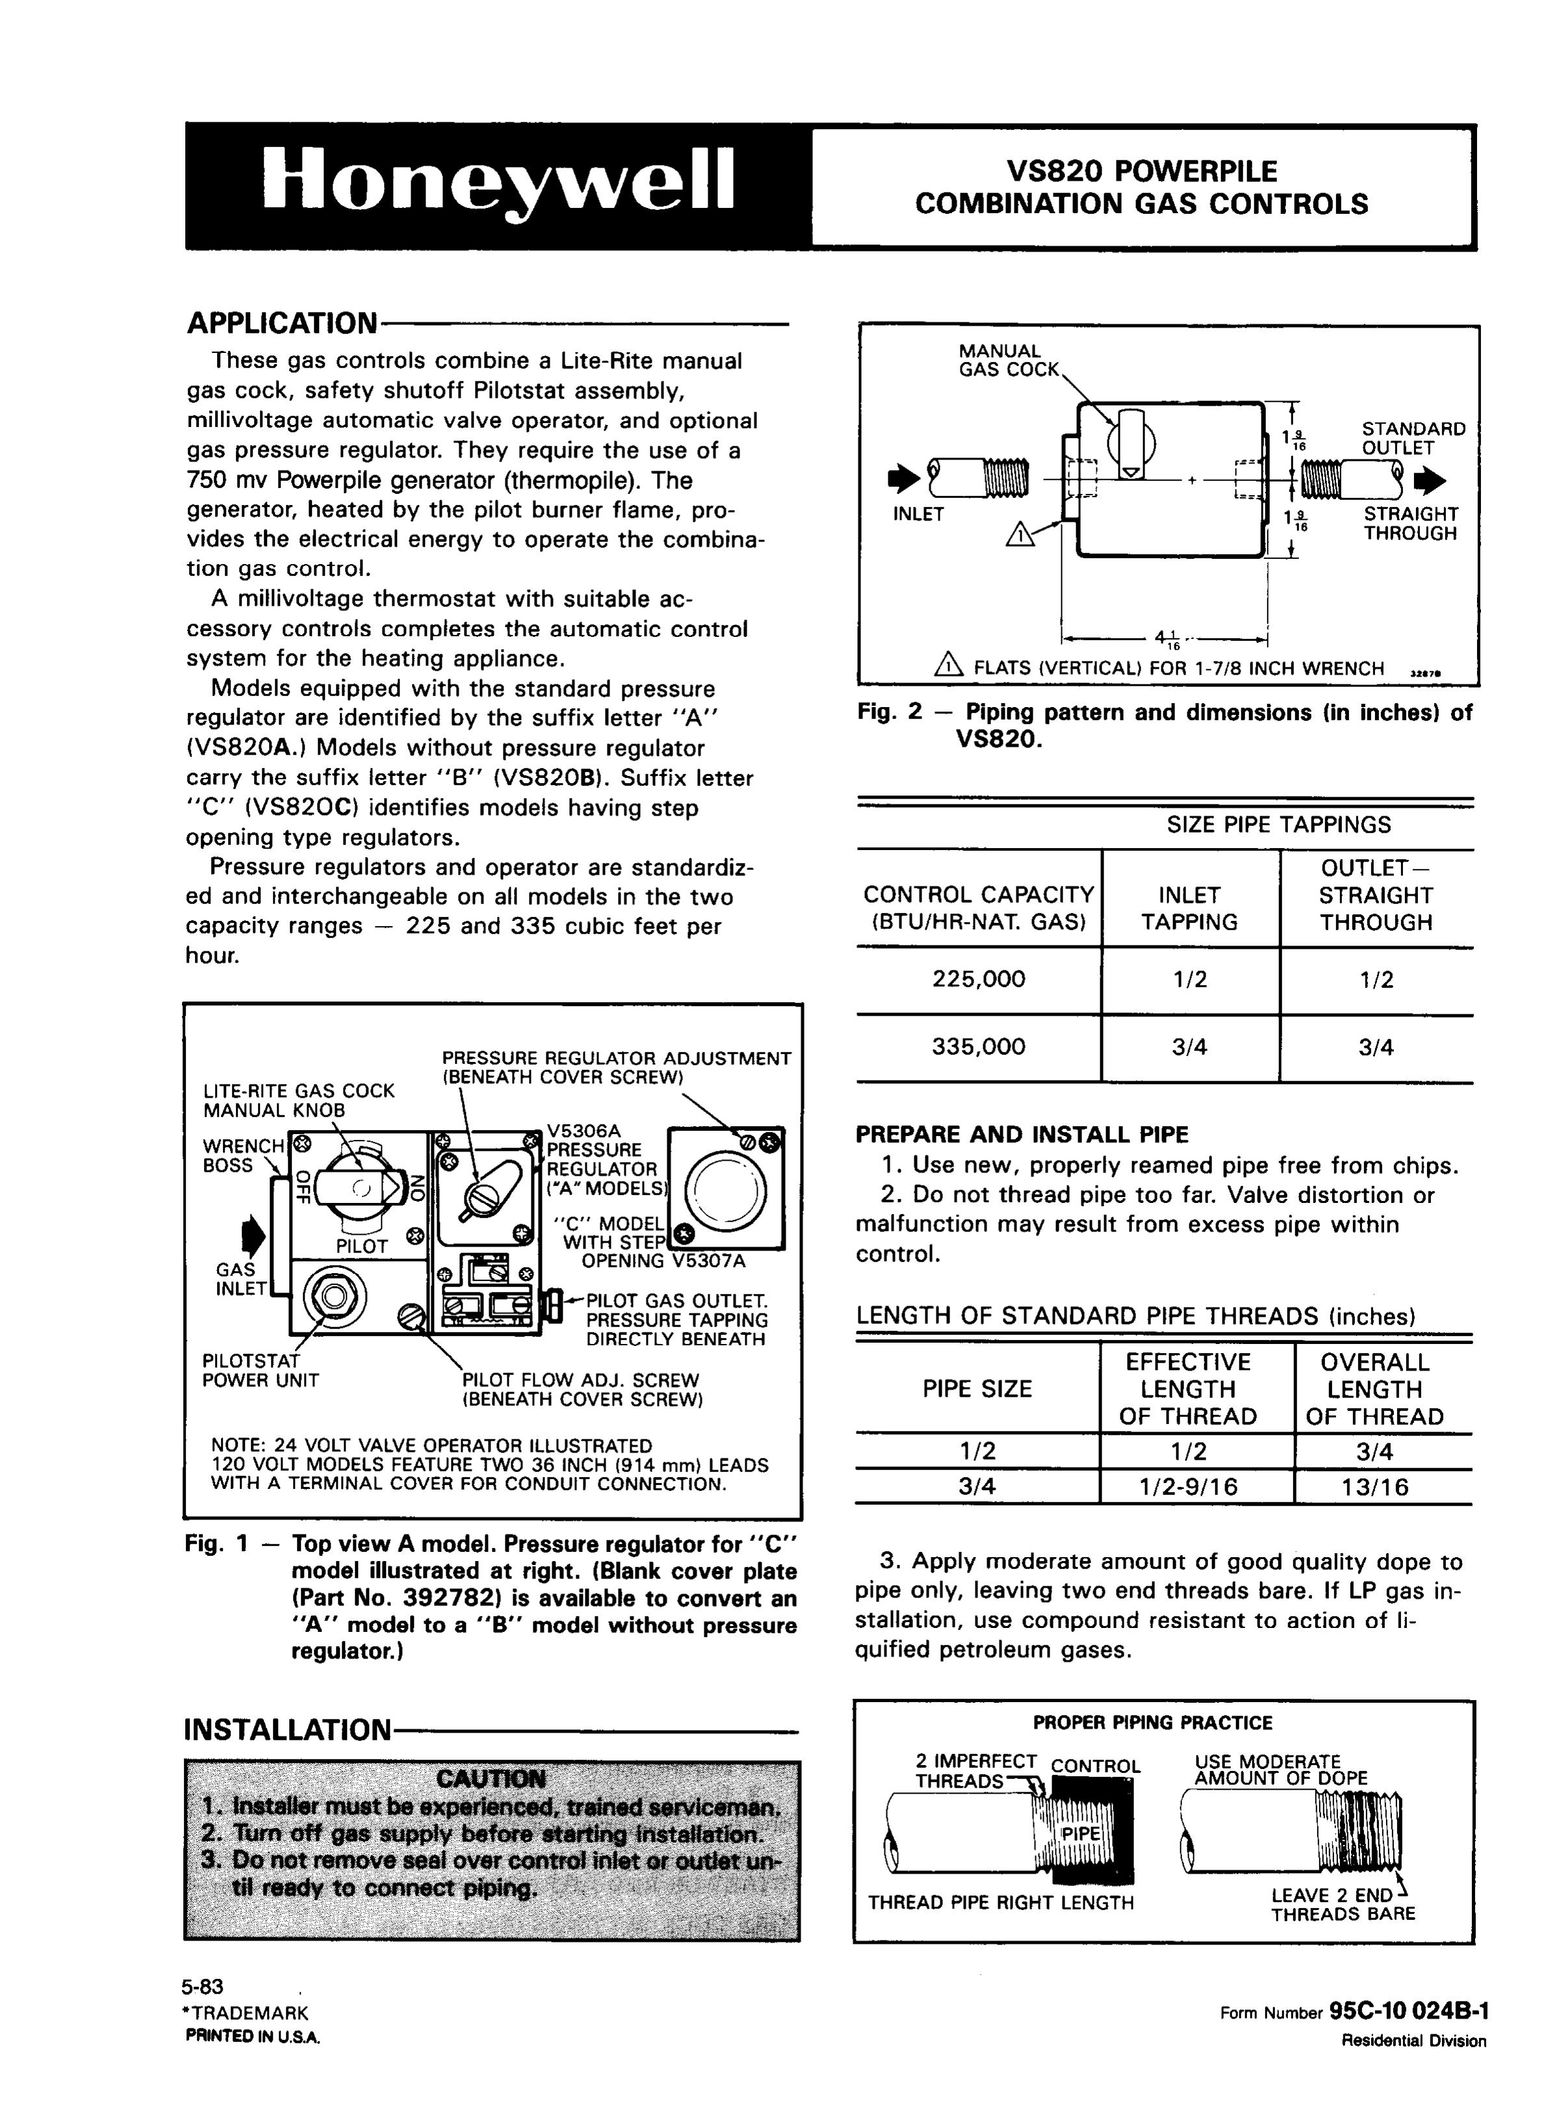 Honeywell VS820 Gas Heater User Manual